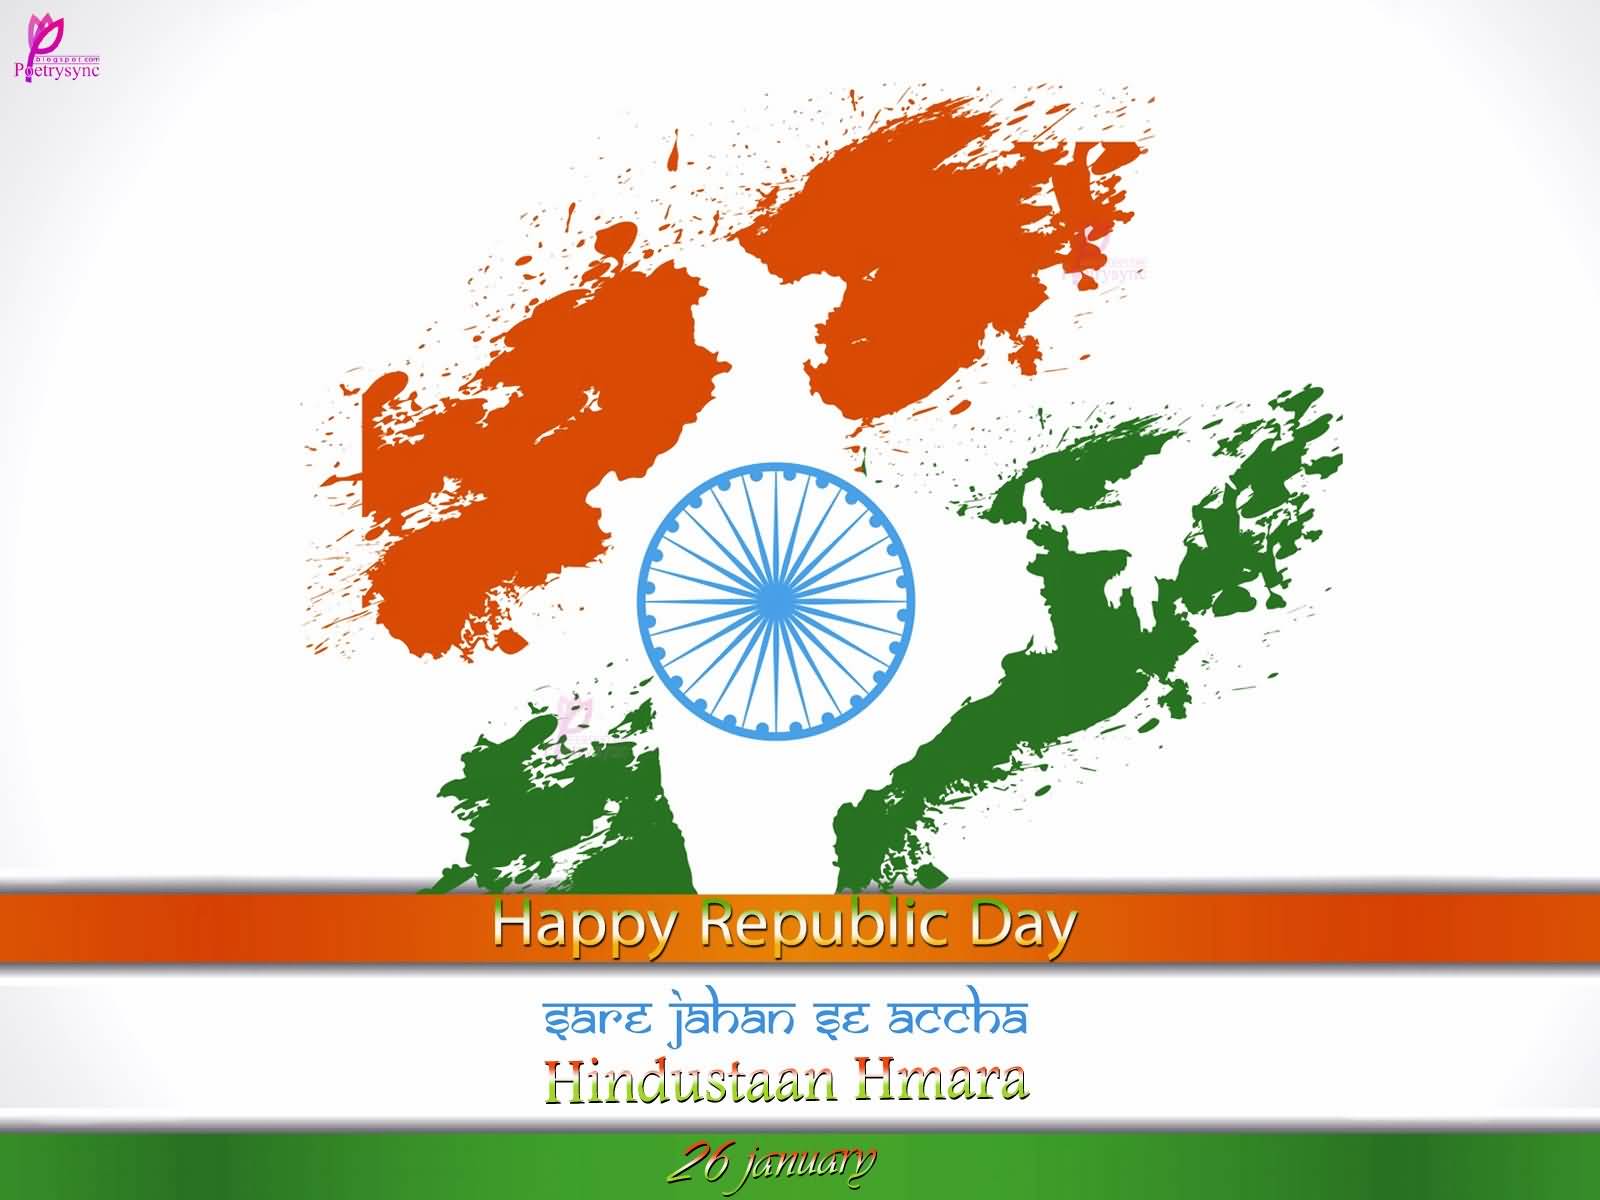 Happy Republic Day Hindustan Hmara 26 January Indian Map Picture